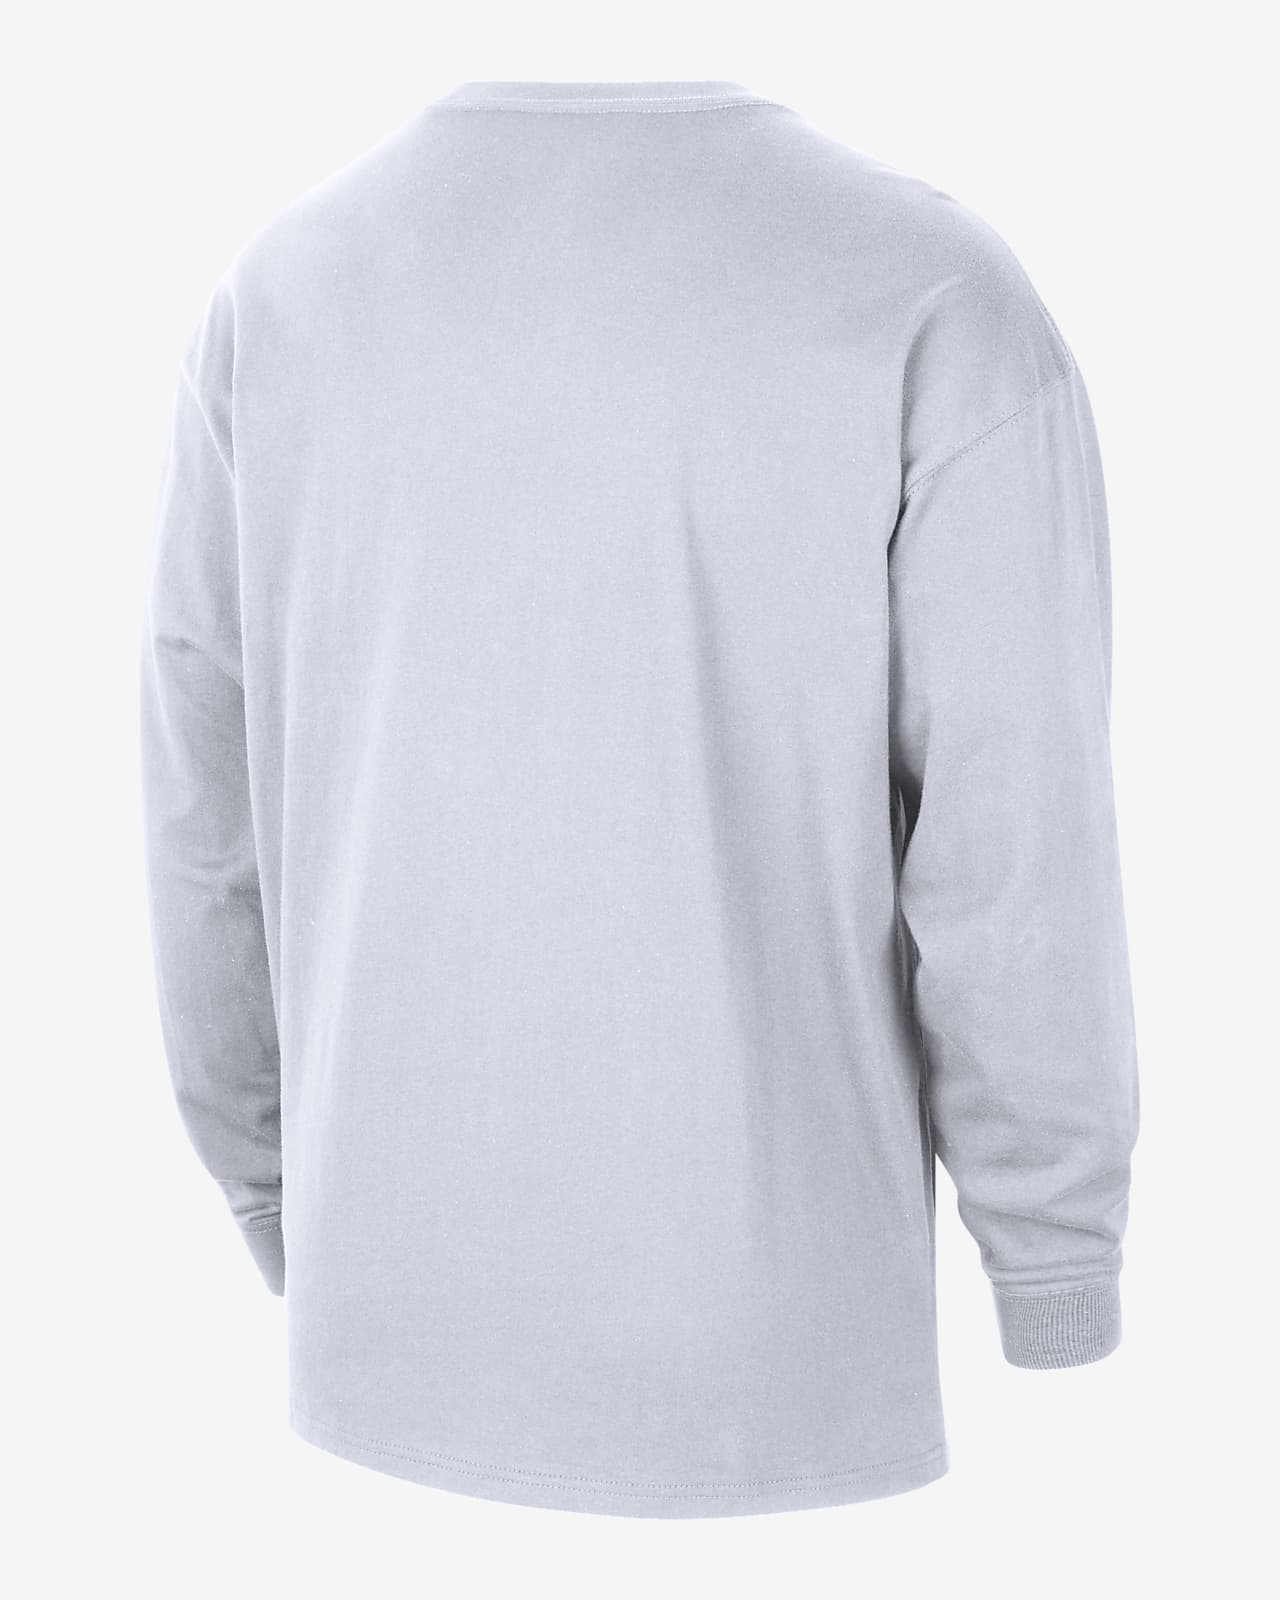 Texas Max90 Men's Nike College Long-Sleeve T-Shirt